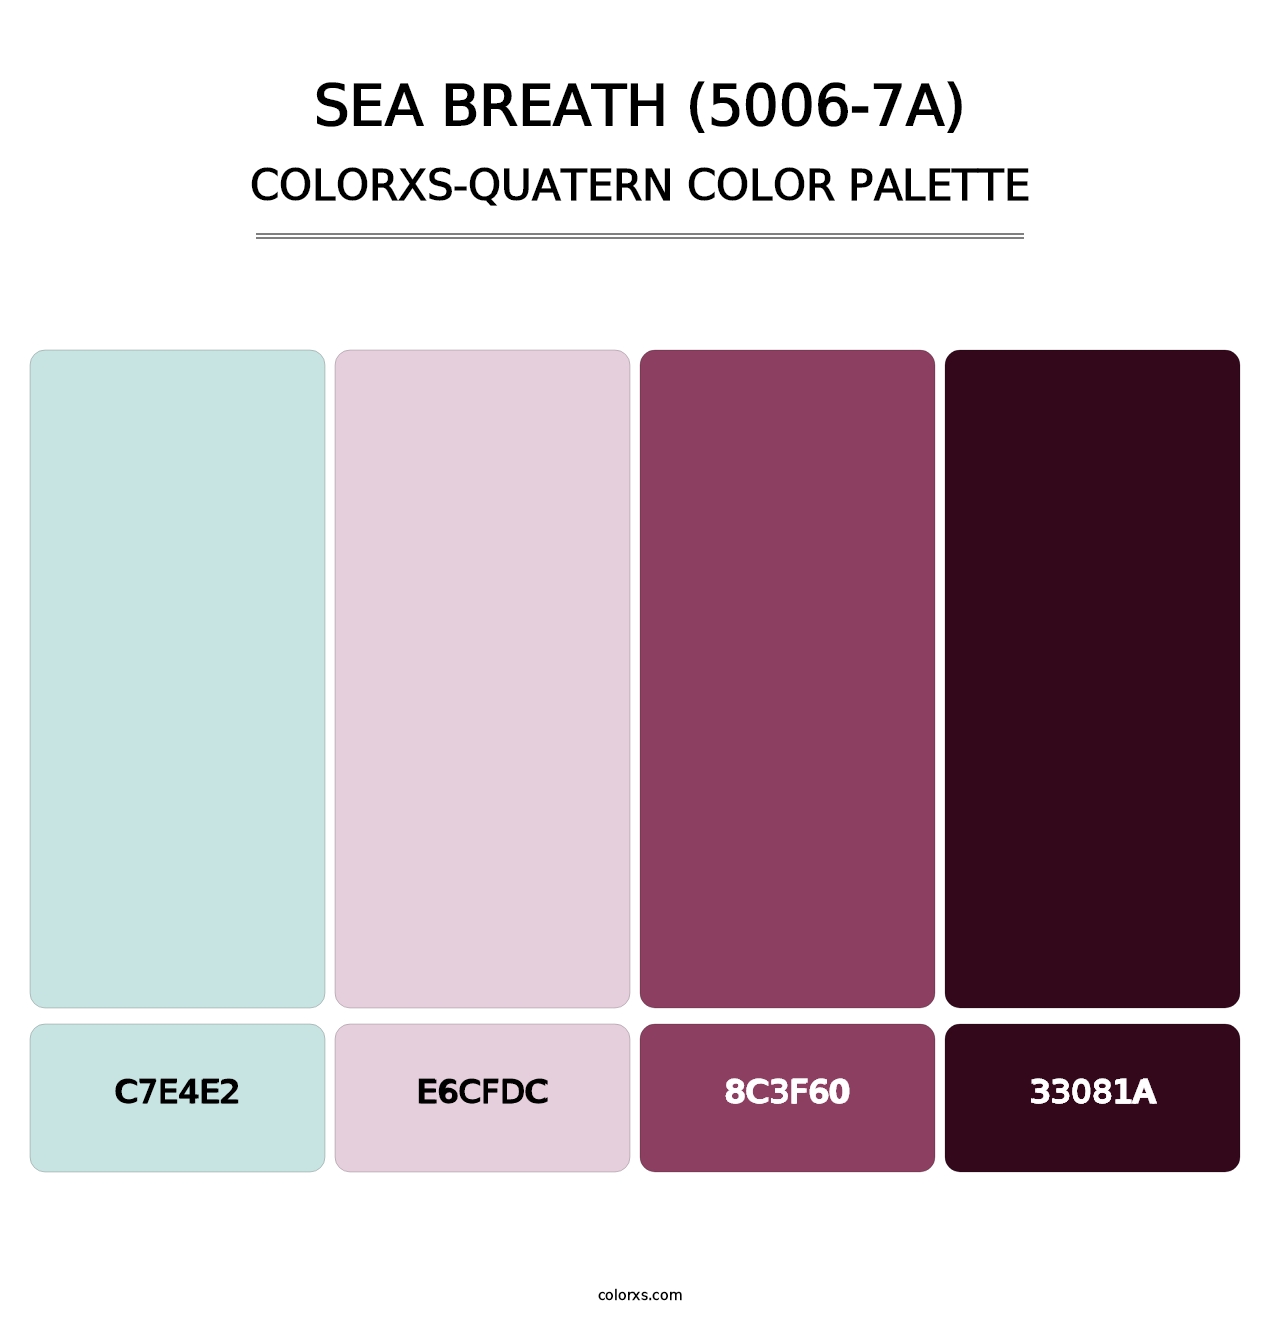 Sea Breath (5006-7A) - Colorxs Quatern Palette